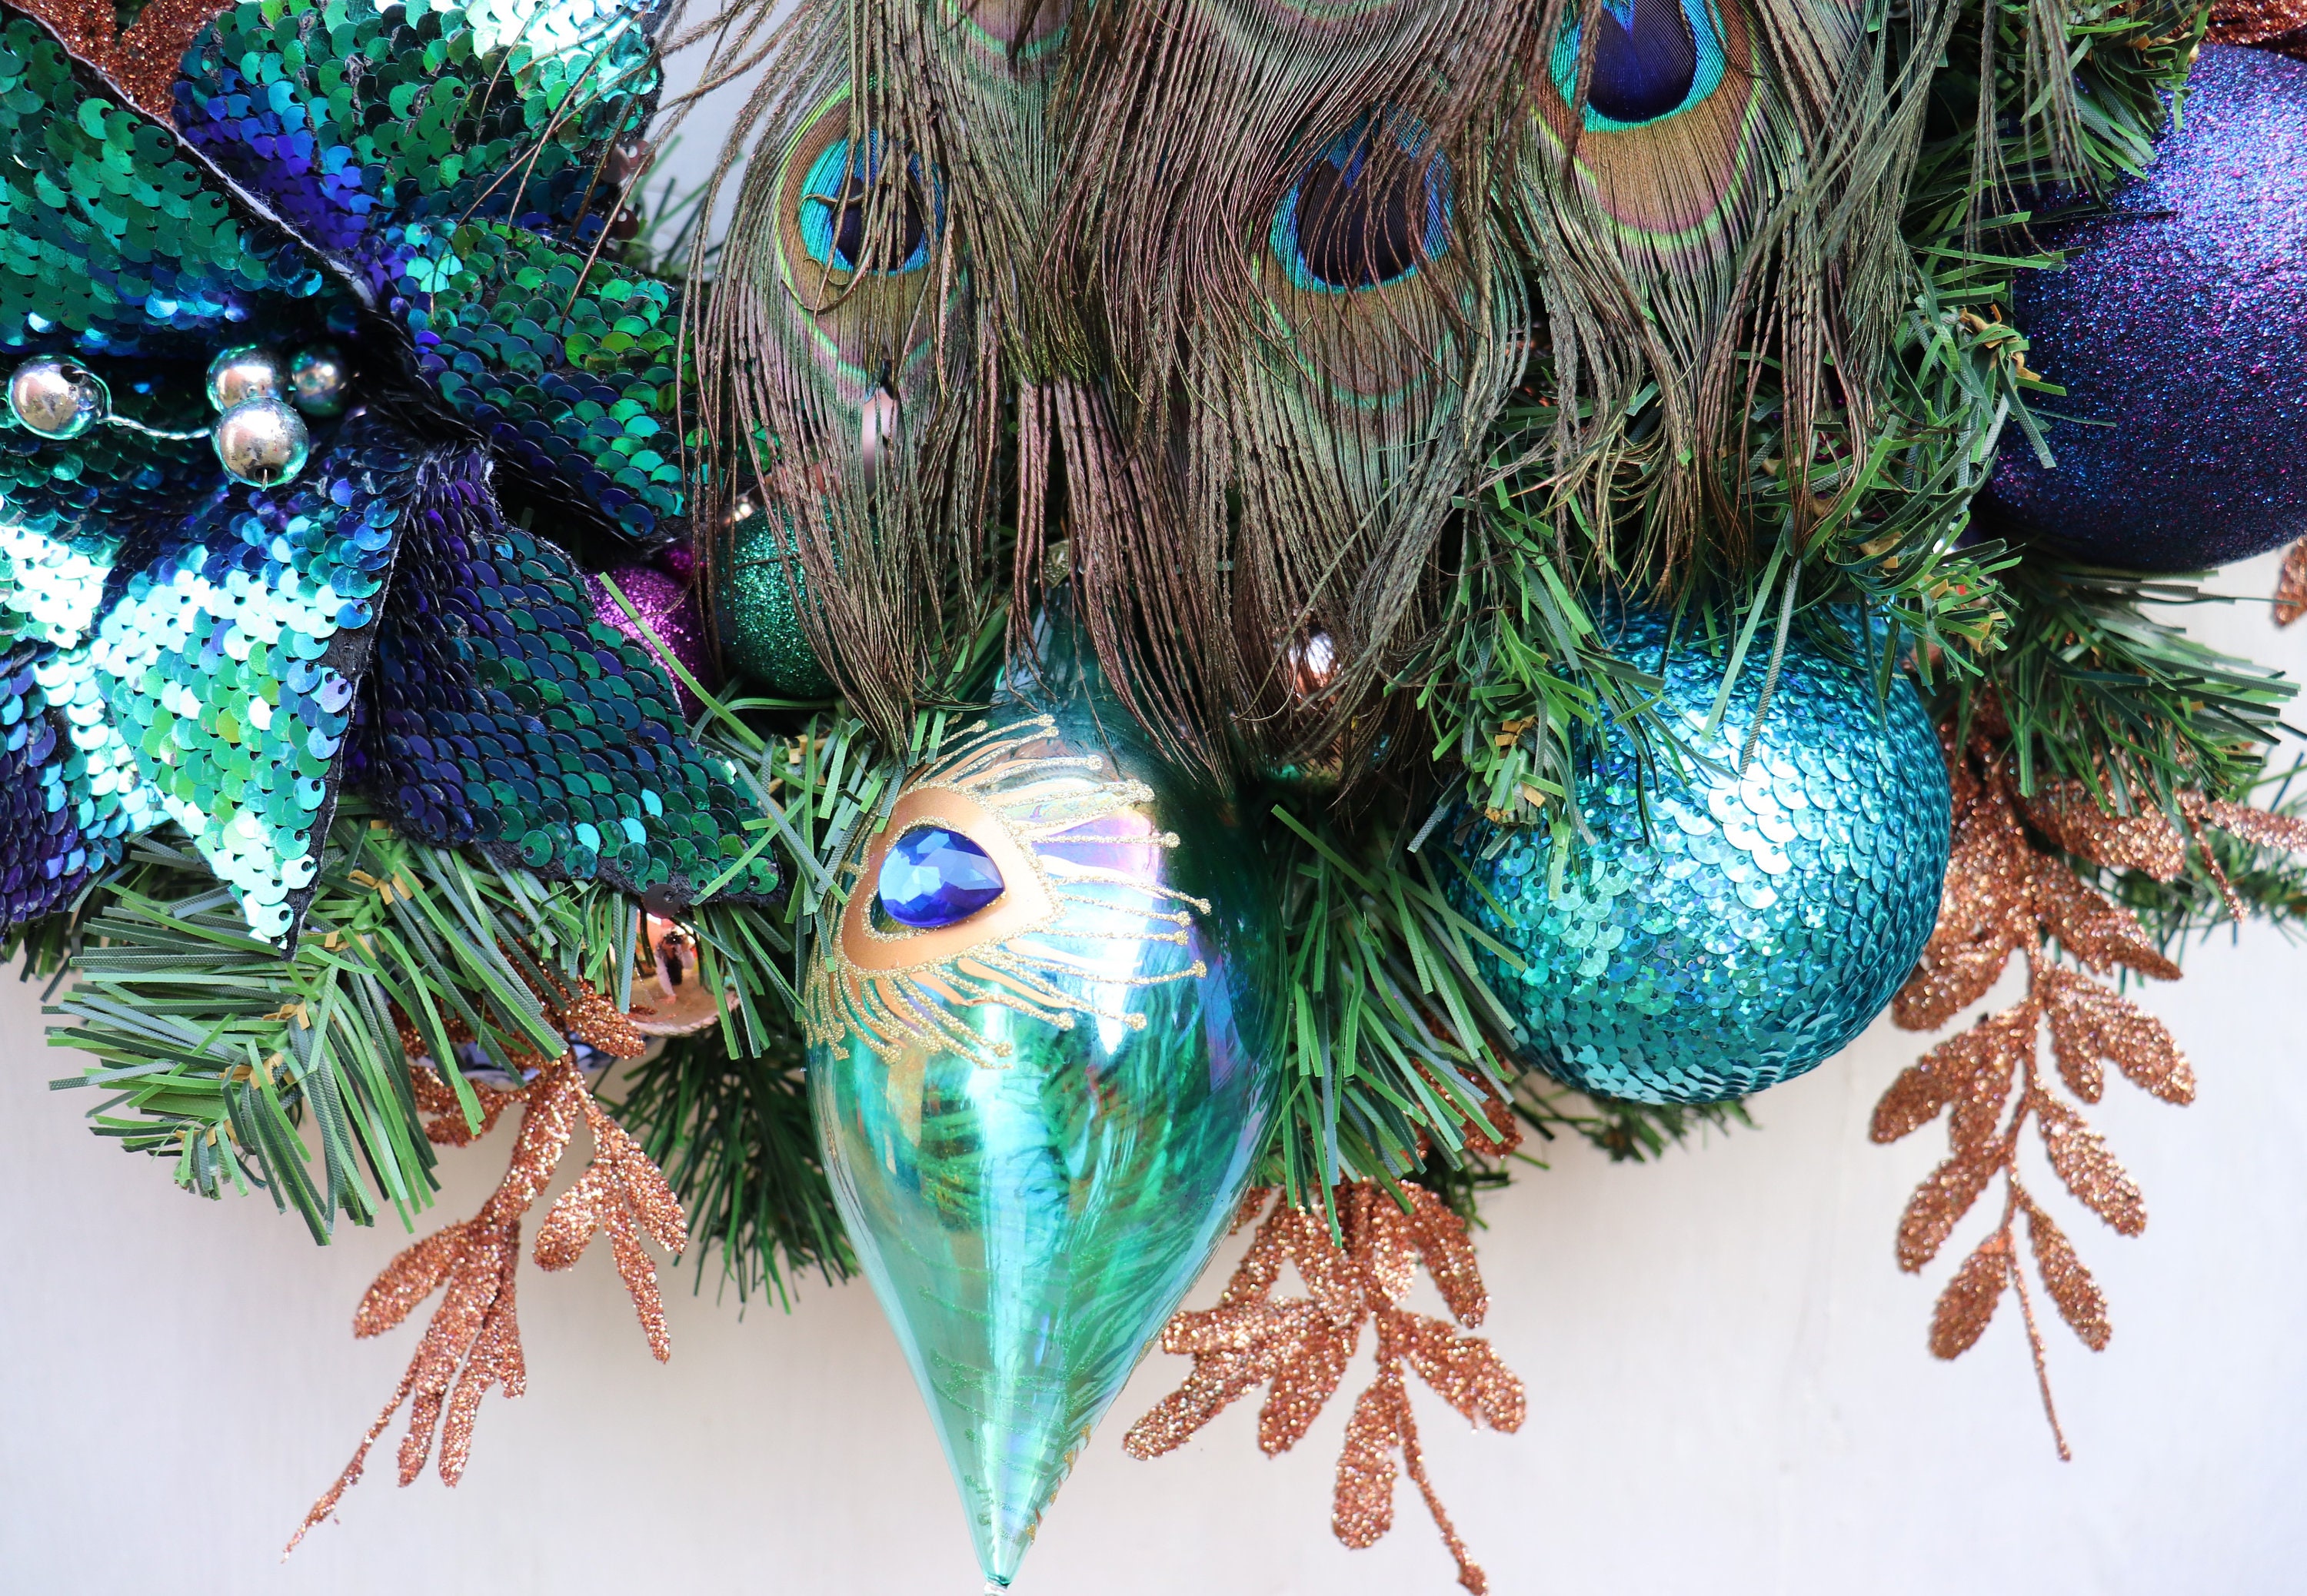 Peacock Christmas Decorating Ideas – Celebrating Christmas